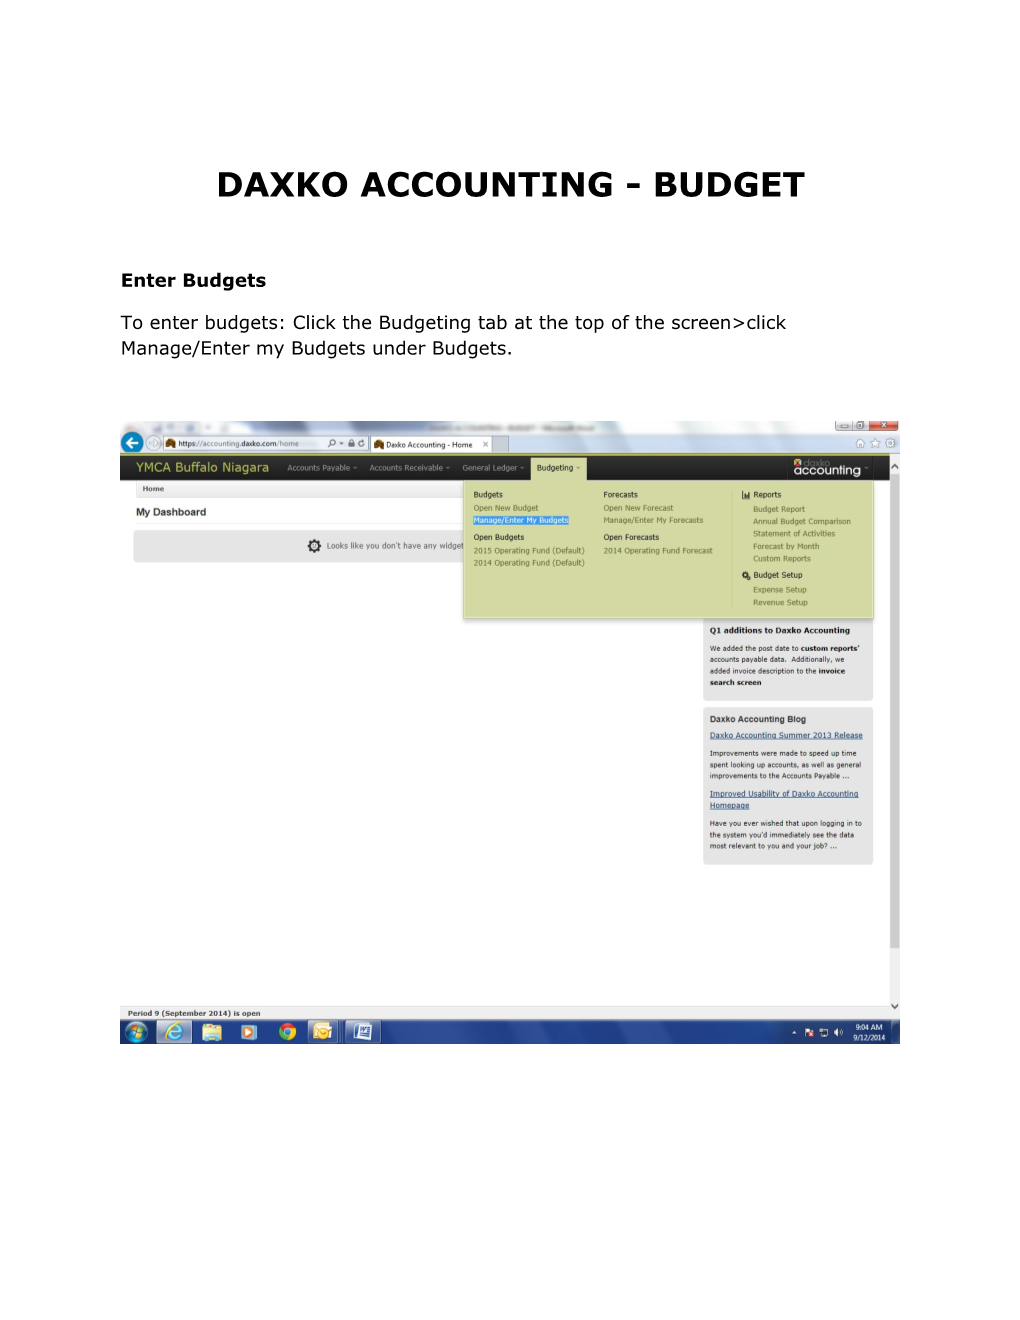 Daxko Accounting - Budget